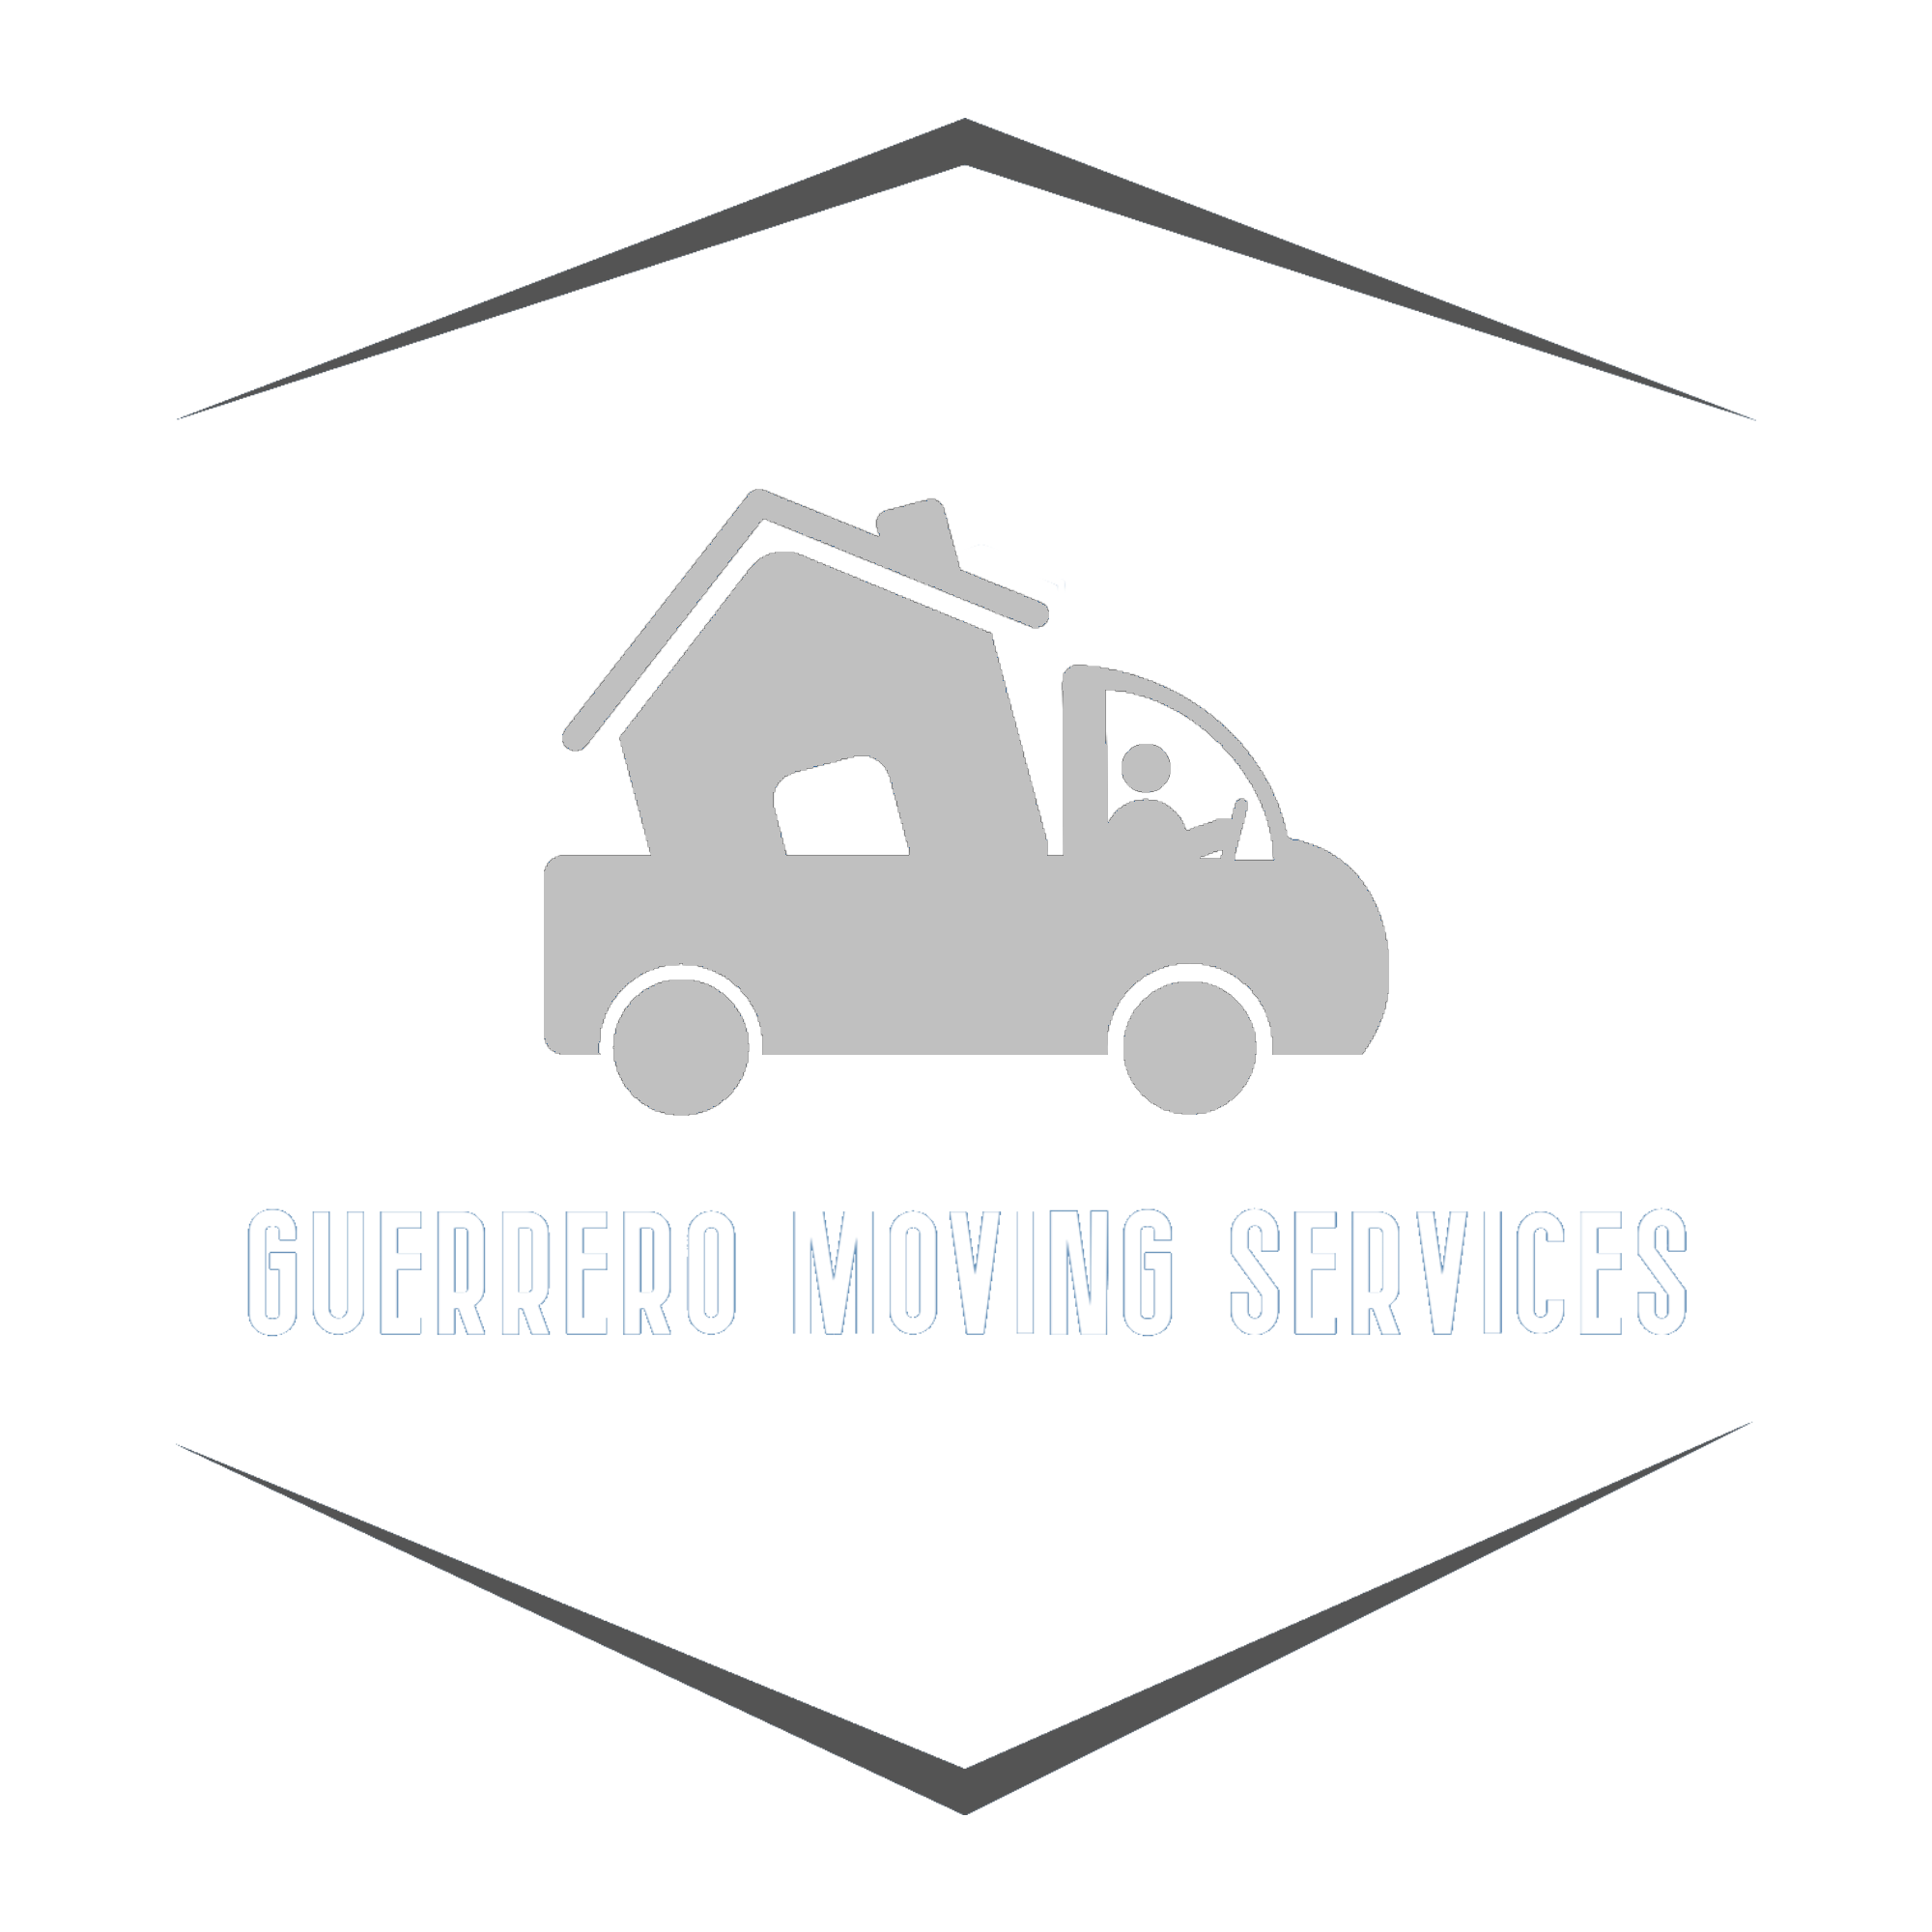 Guerrero Moving Services